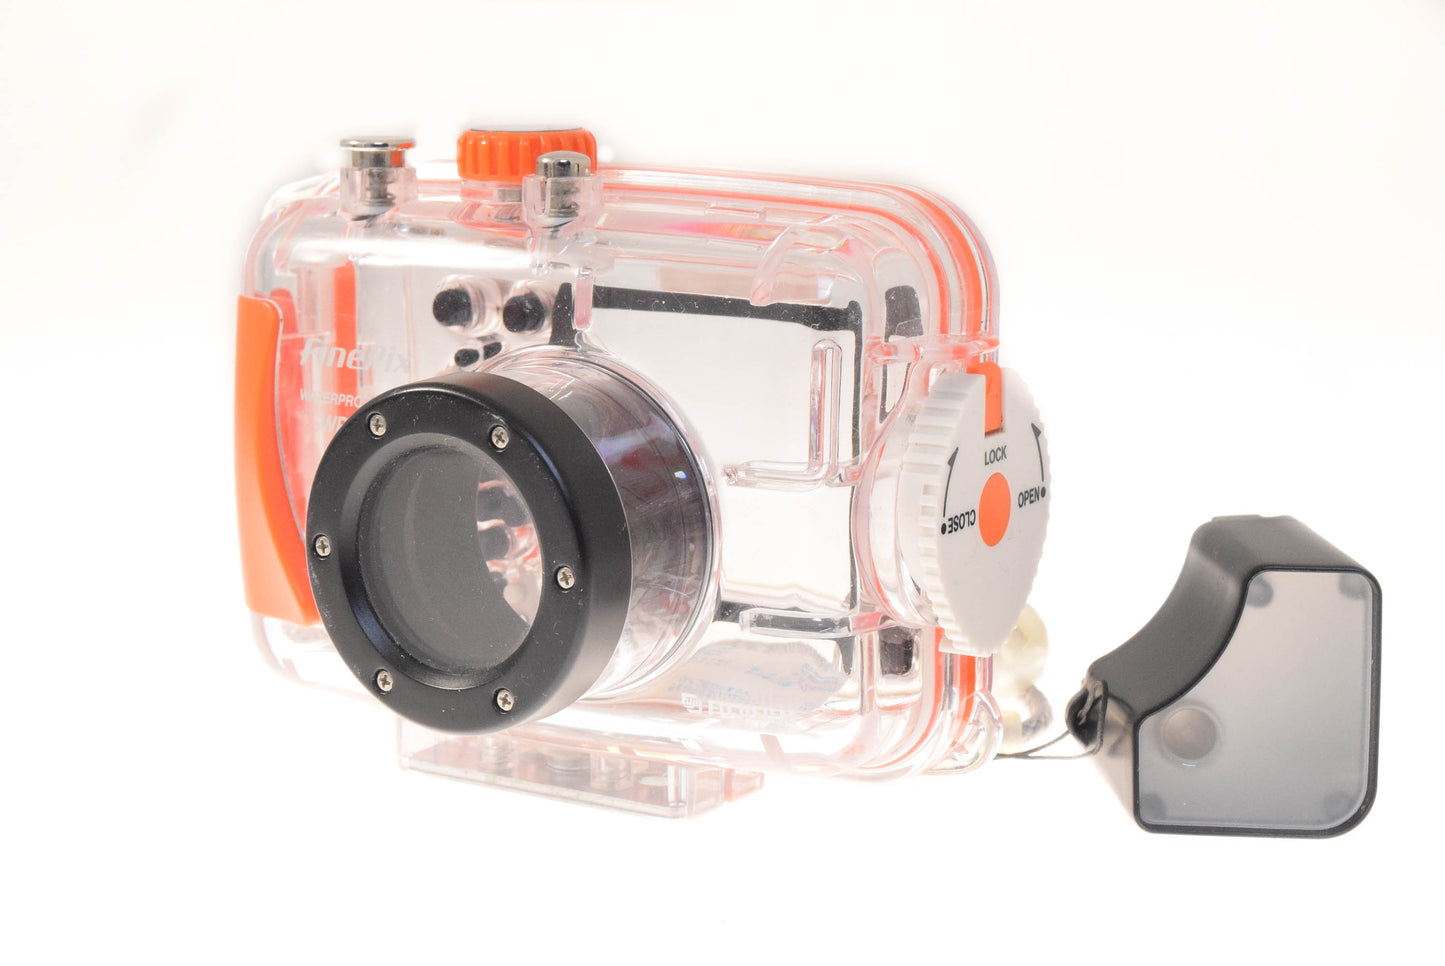 Fujifilm WP-FXF30 Waterproof Case